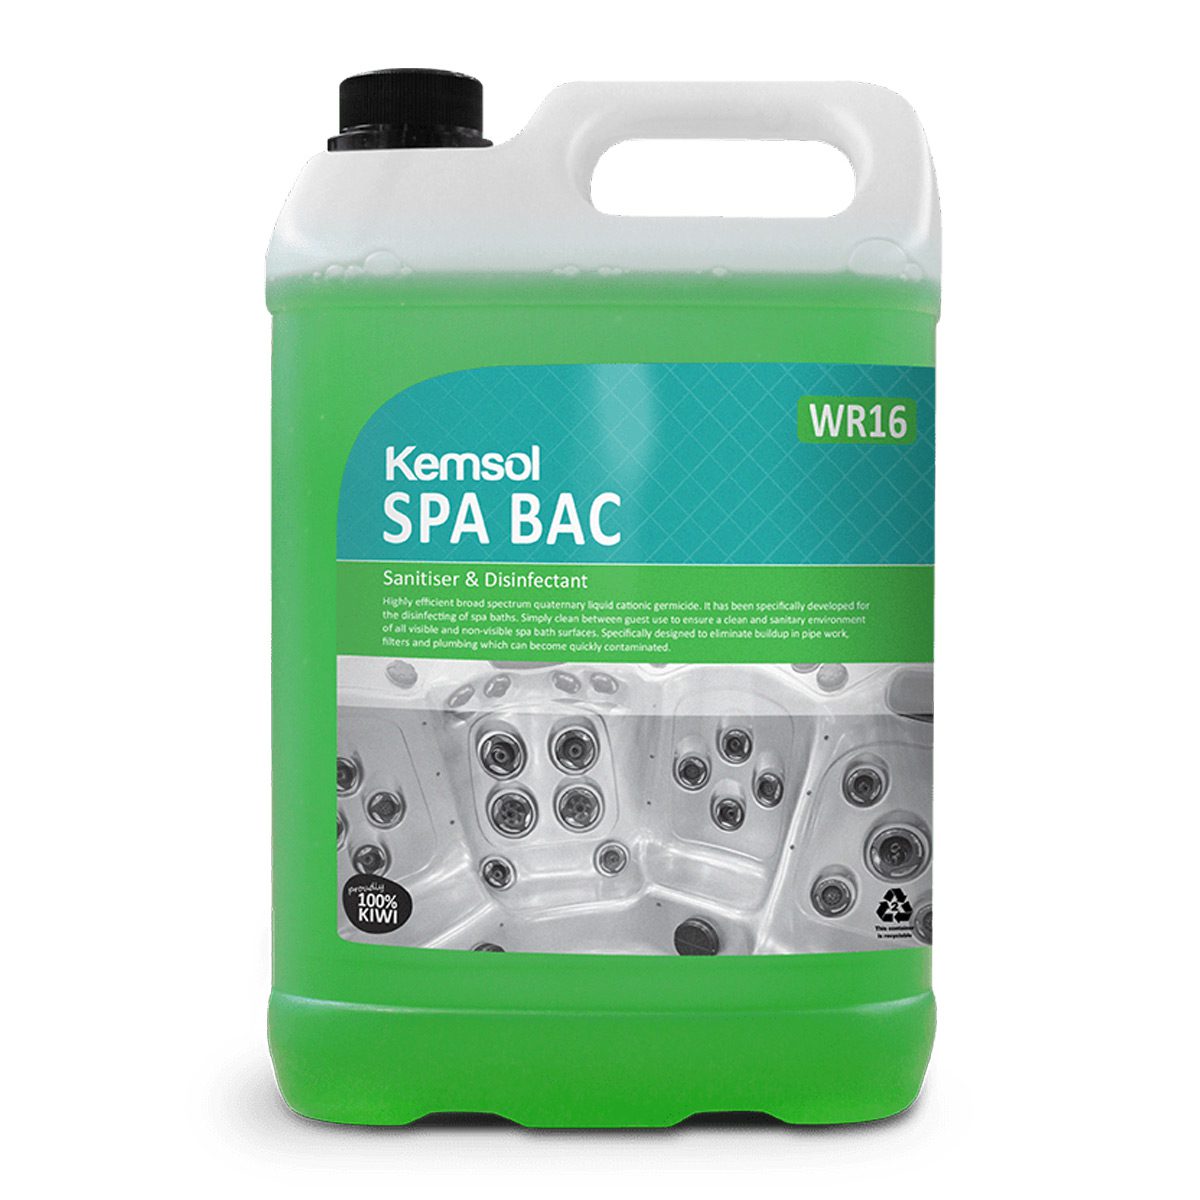 cleaning-products-washroom—kemsol-spa-bac-sanitiser-5L-litre-efficient-broad-spectrum-quaternary-liquid-cationic-germicide-for-disinfecting-spa-baths-vjs-distributors-KSPA